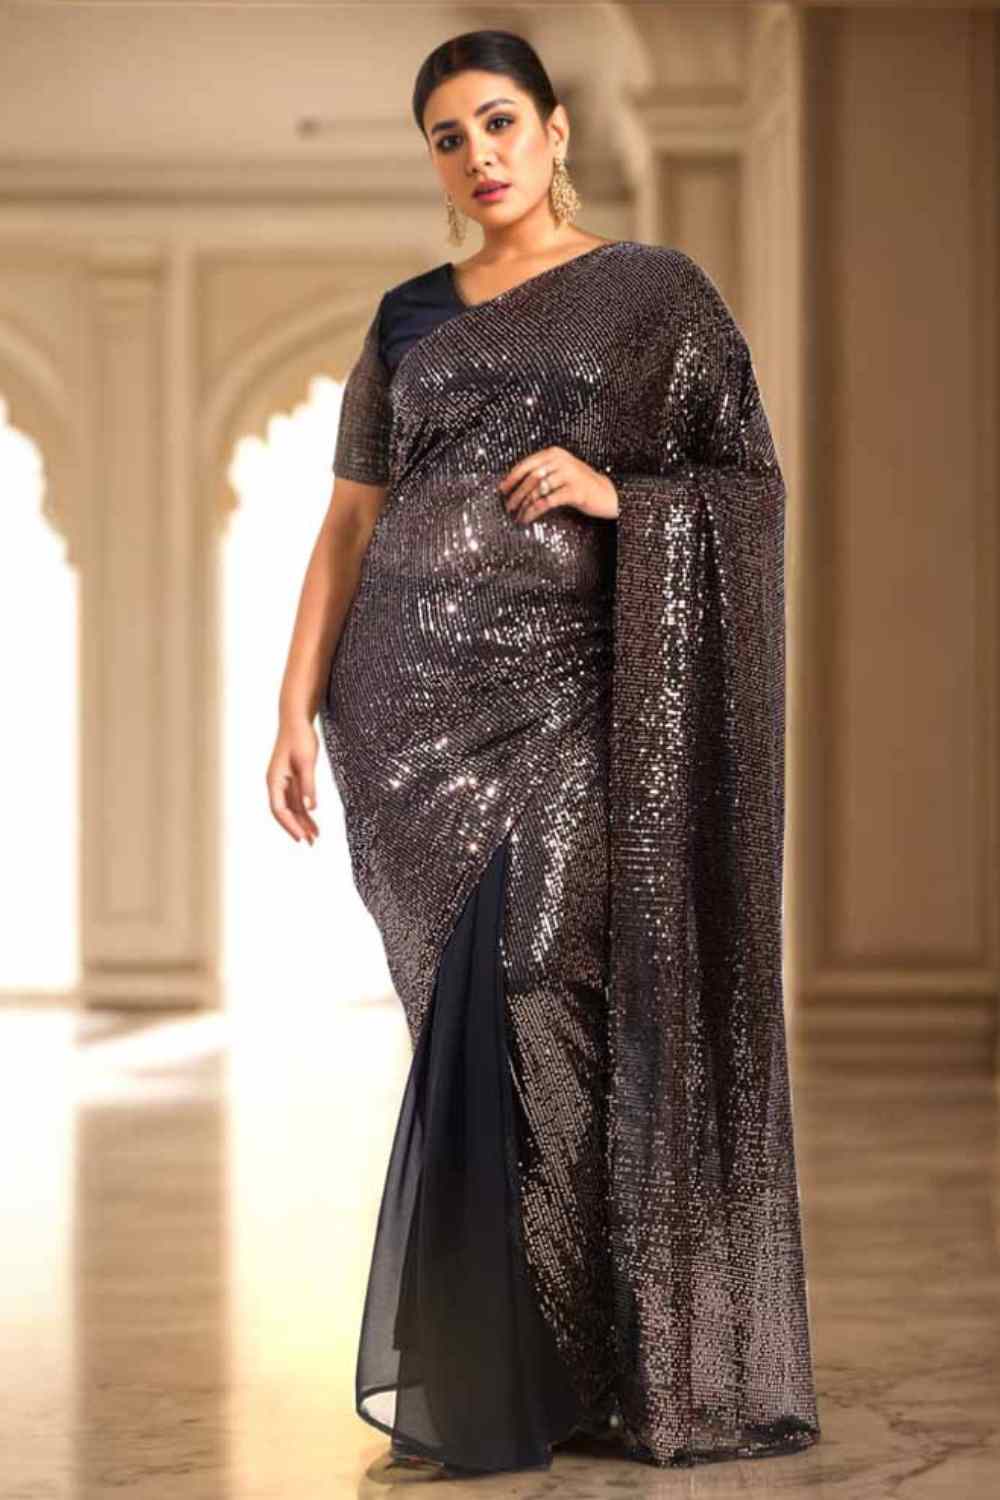 Indian women in saree. | Fancy sarees, Indian fashion, India beauty women